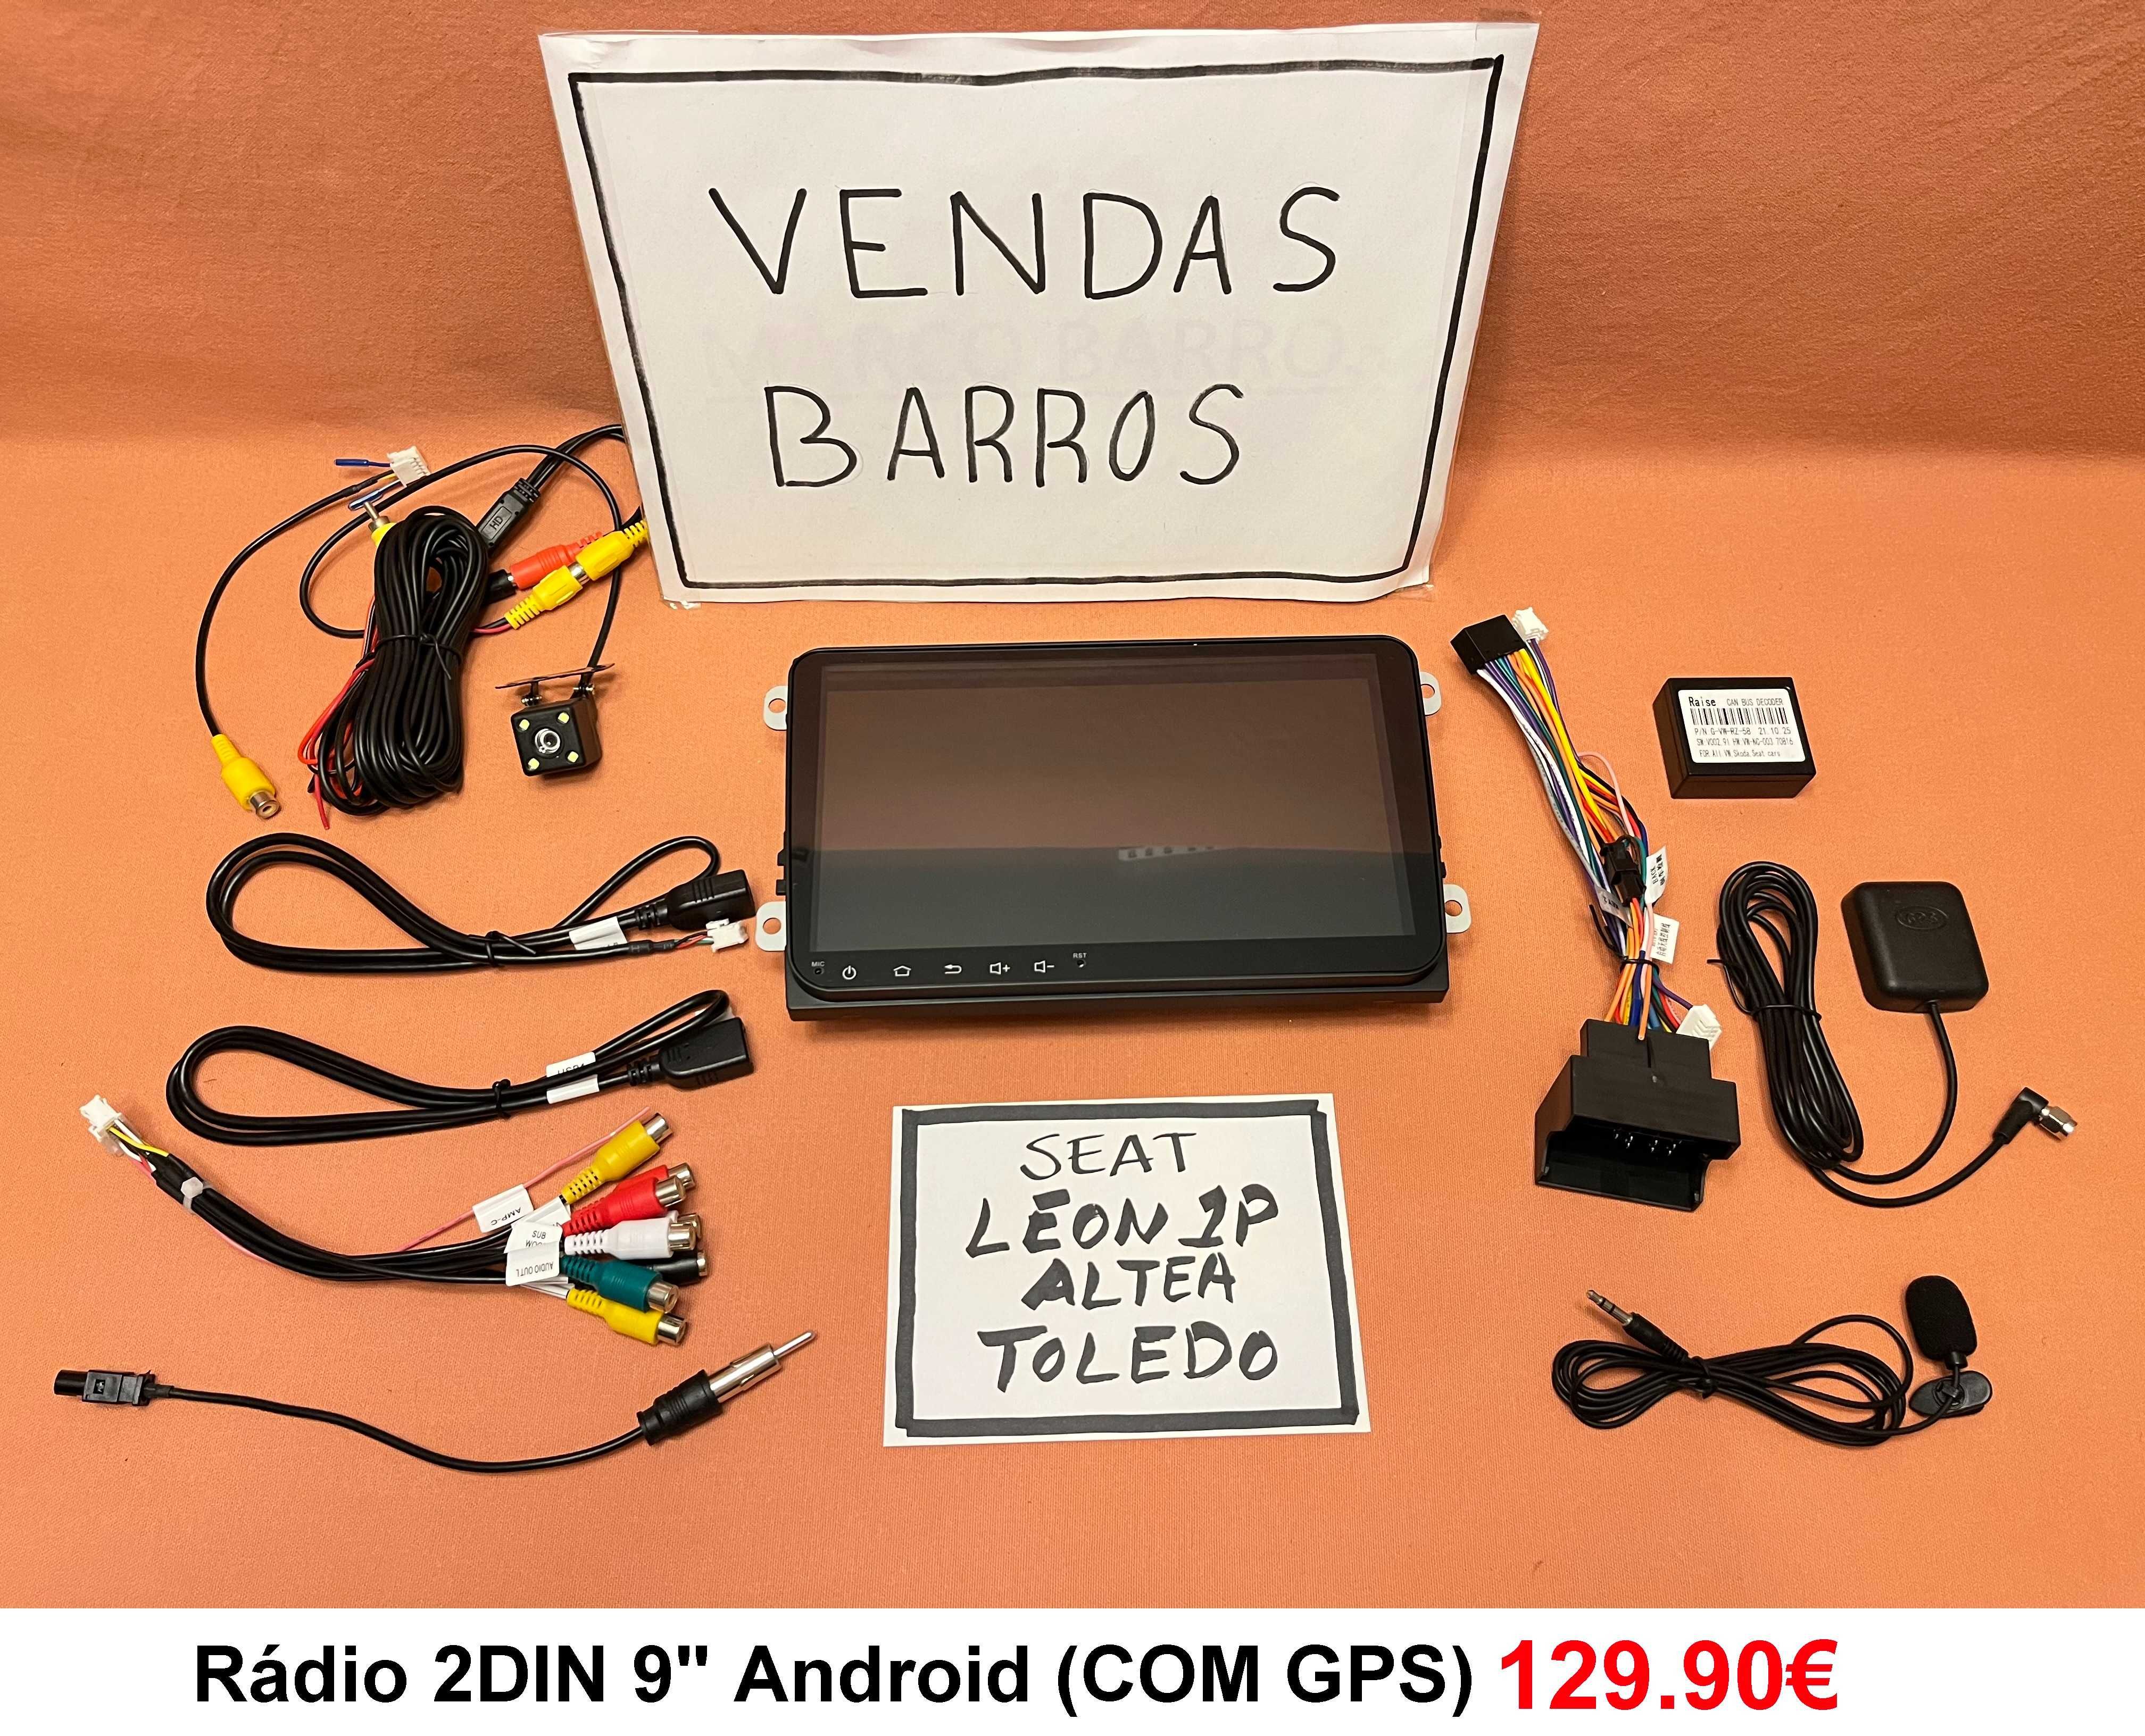 (NOVO) Rádio 2DIN 9" • SEAT Leon 1P • Toledo • Altea • Android 2+32GB